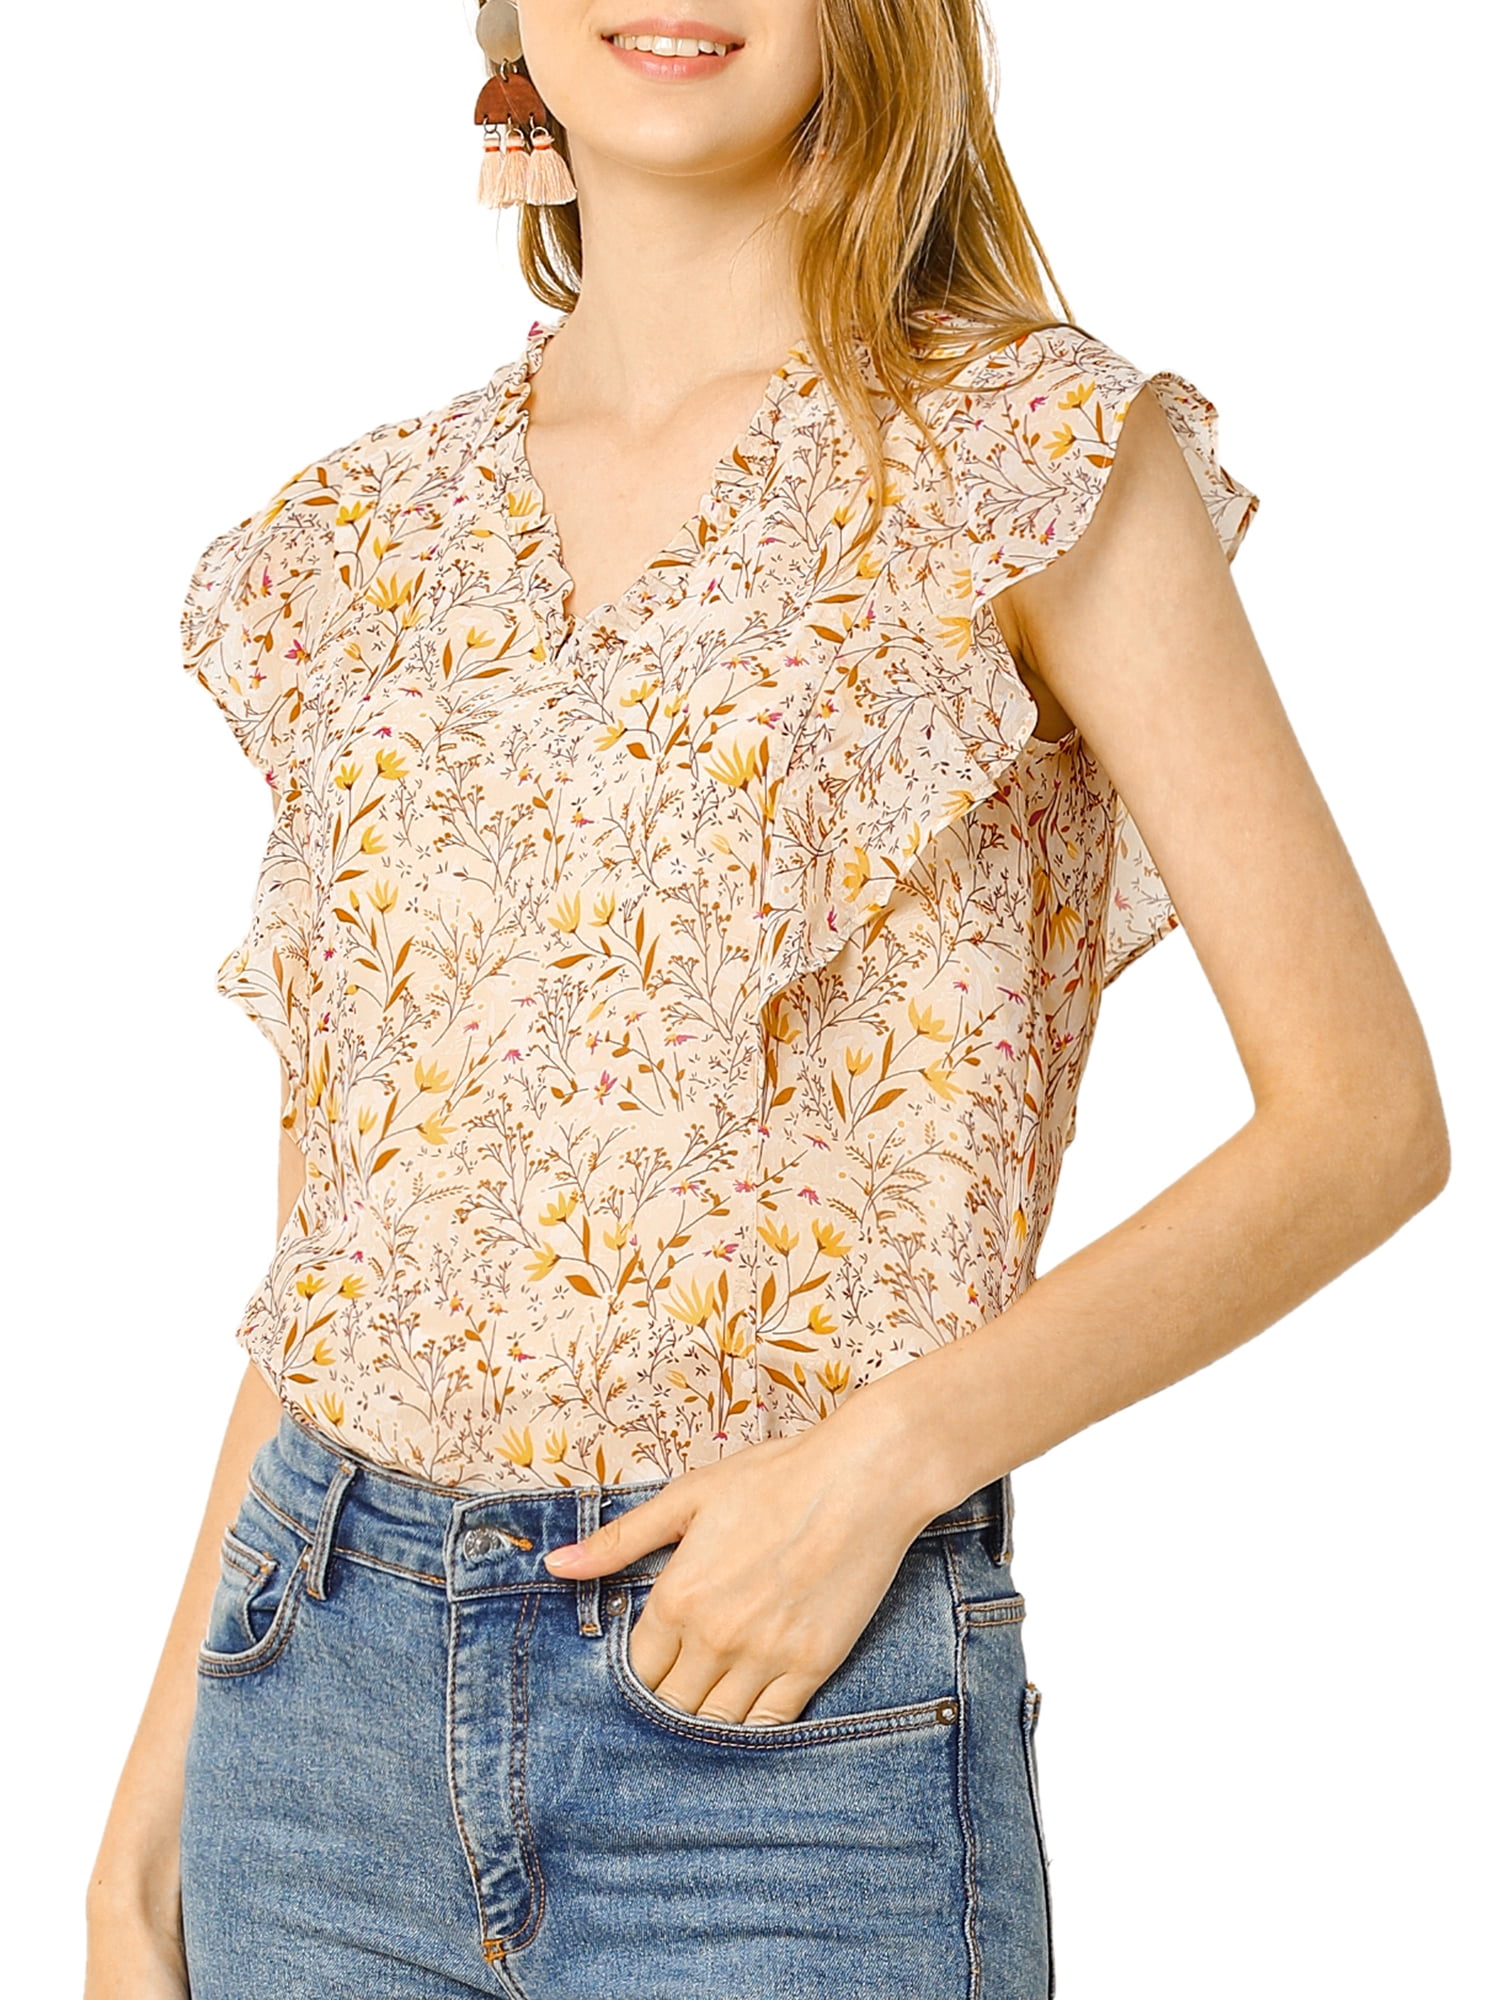 LAPA Ladies Summer Ruffle T-shirt Tops Women Casual Sleeveless Plain Blouse 2-16 